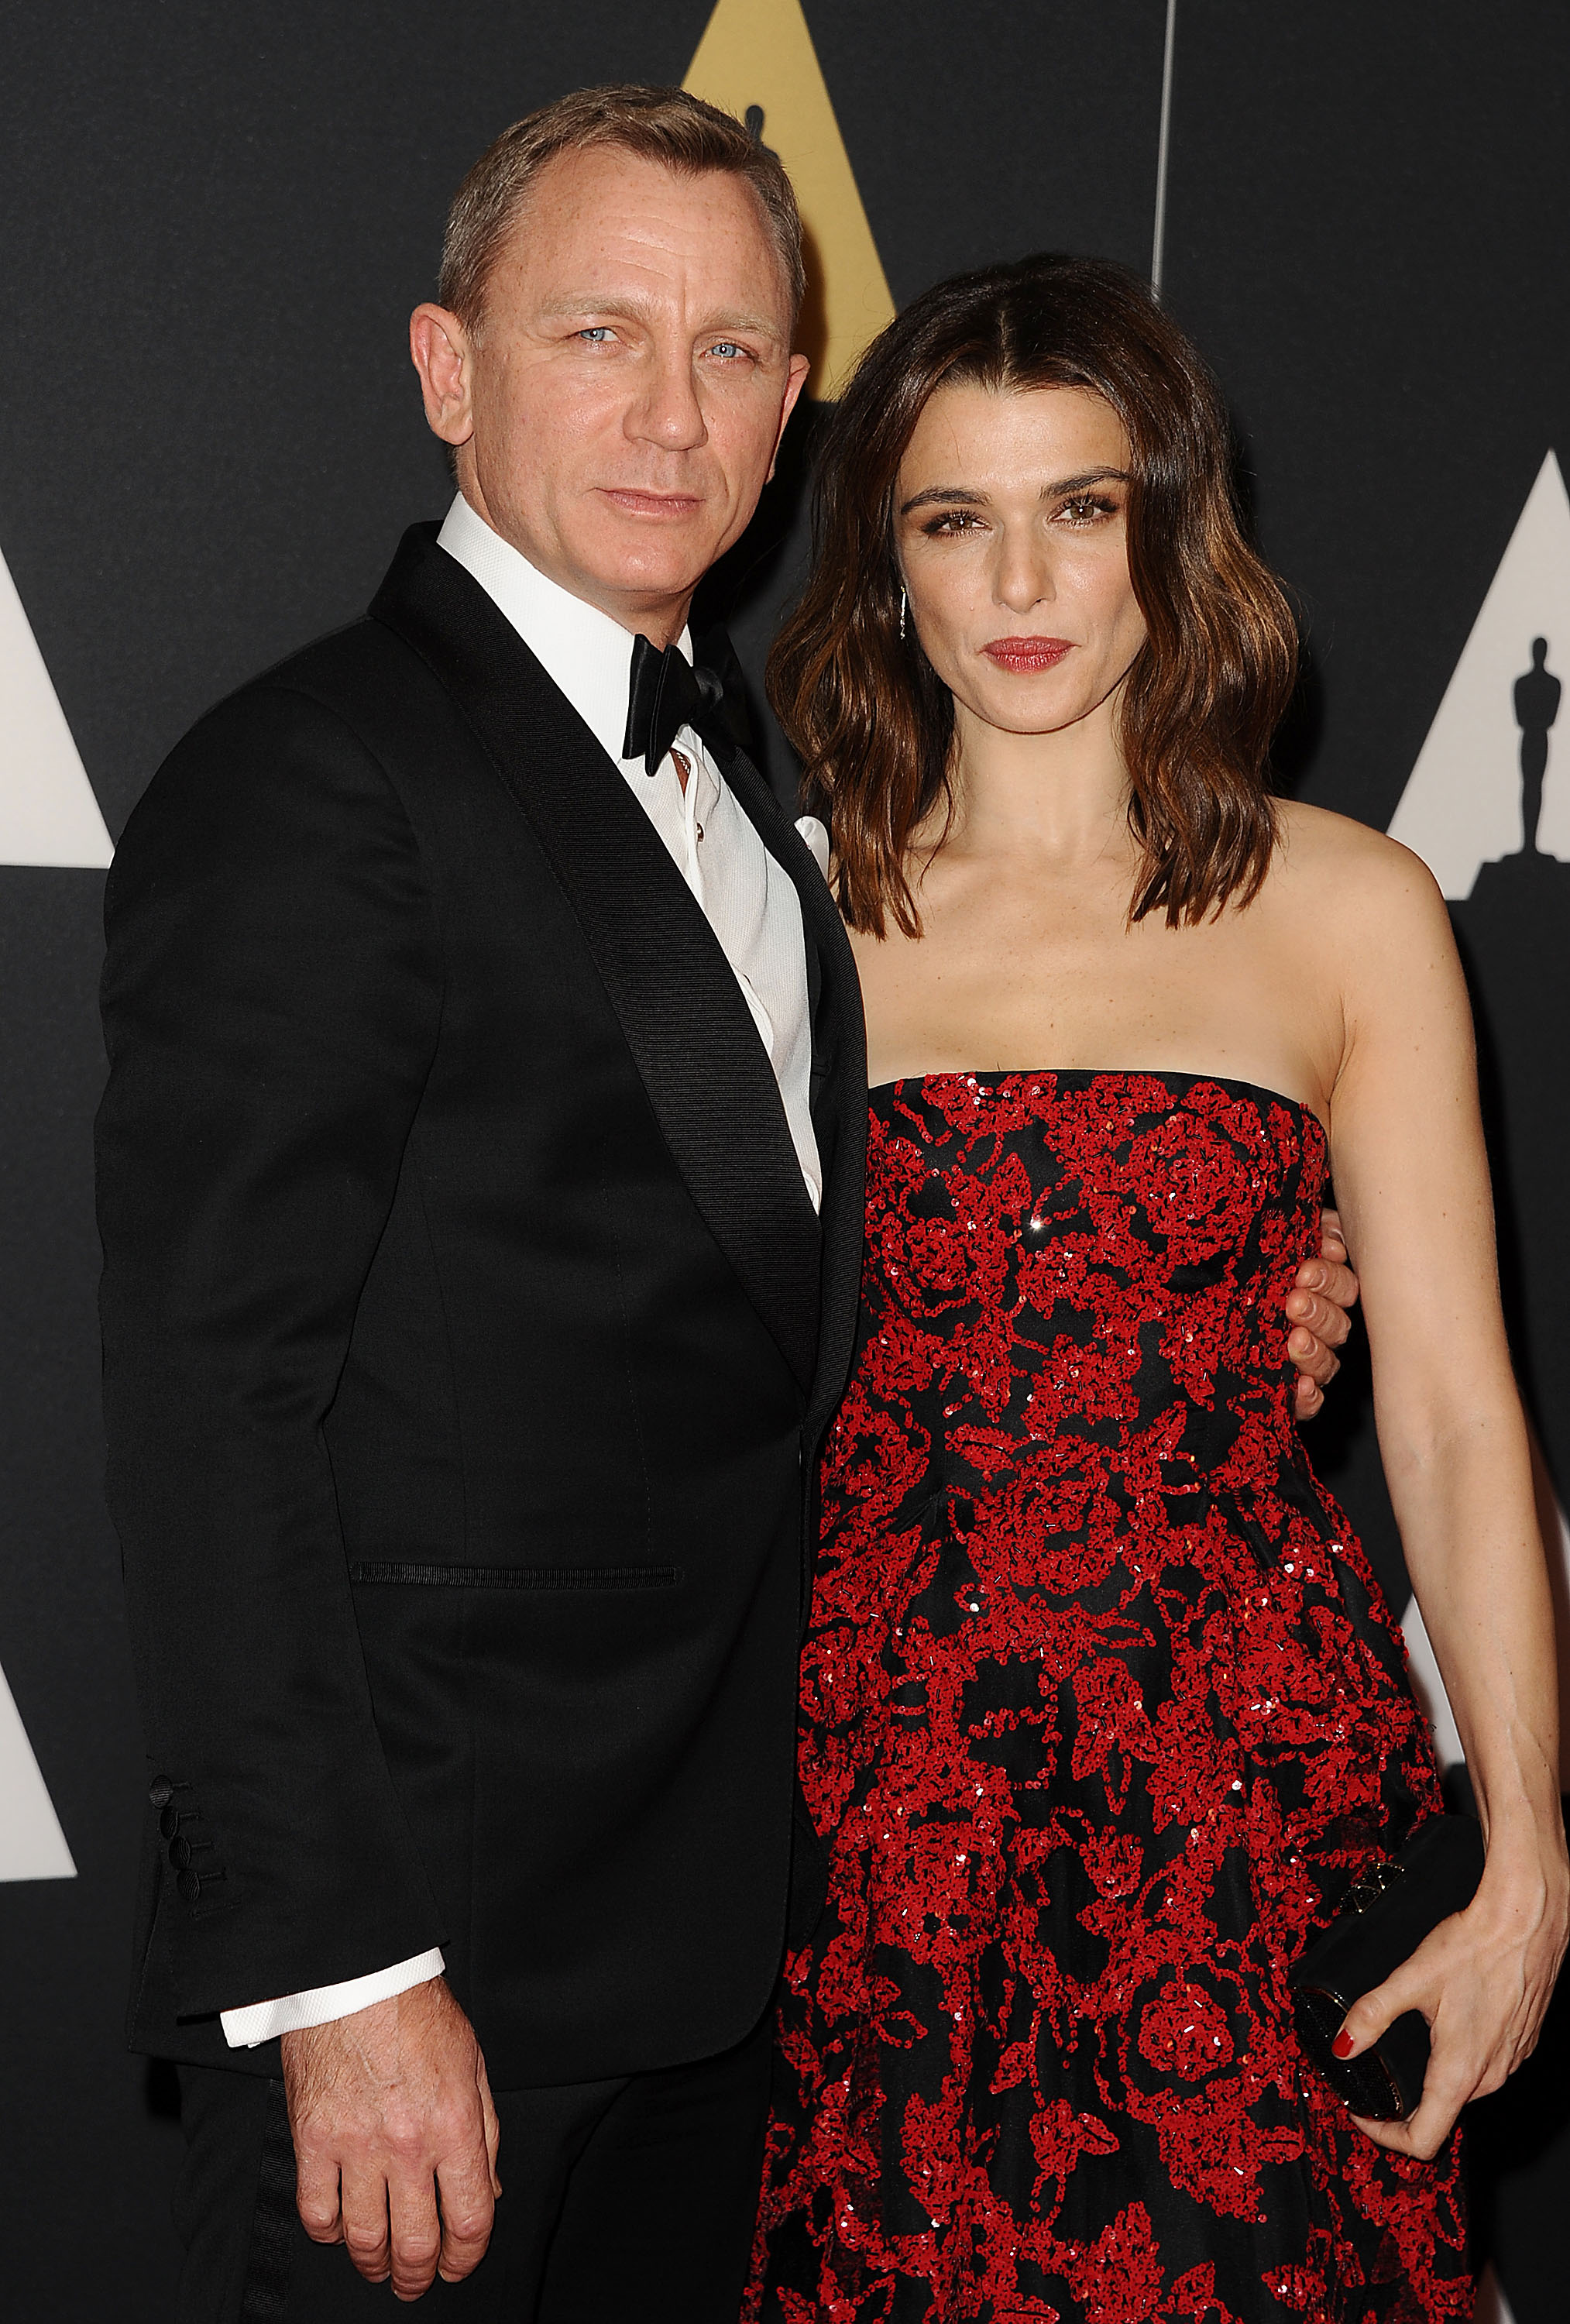 Rachel Weisz Says Daughter 'Does Look Very Like' Husband Daniel Craig ...